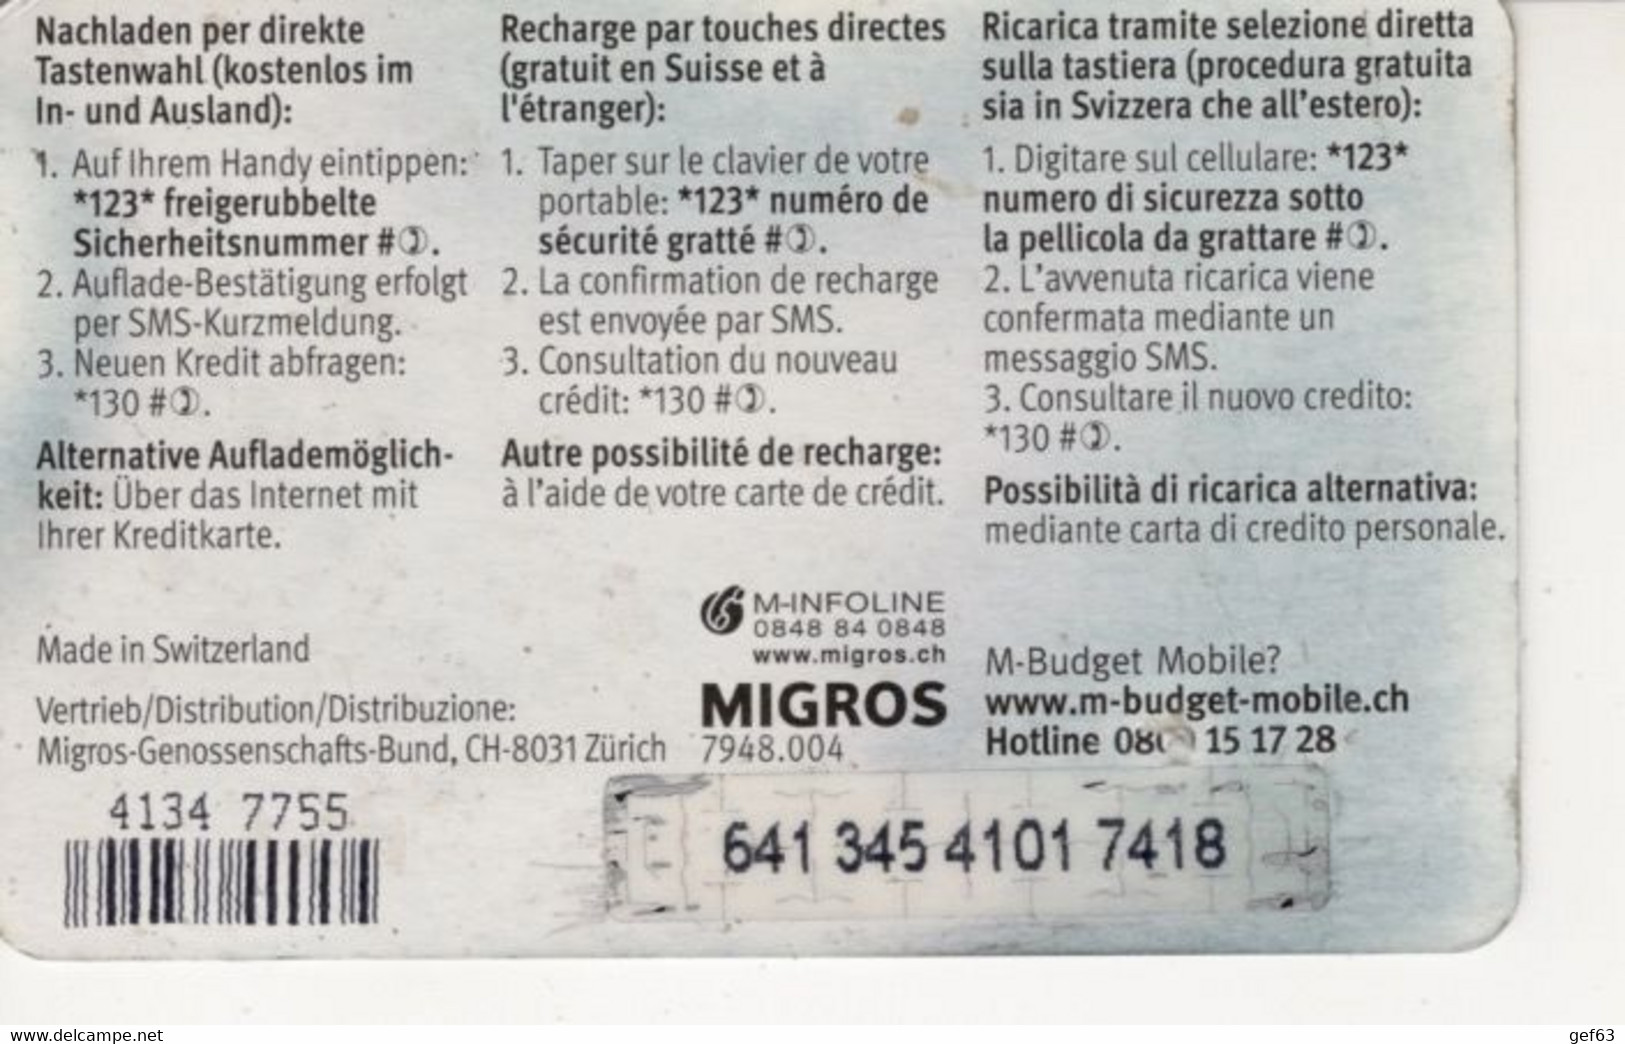 Migros - M-Budget Mobile - Mobile Value Card 10 CHF - Telekom-Betreiber